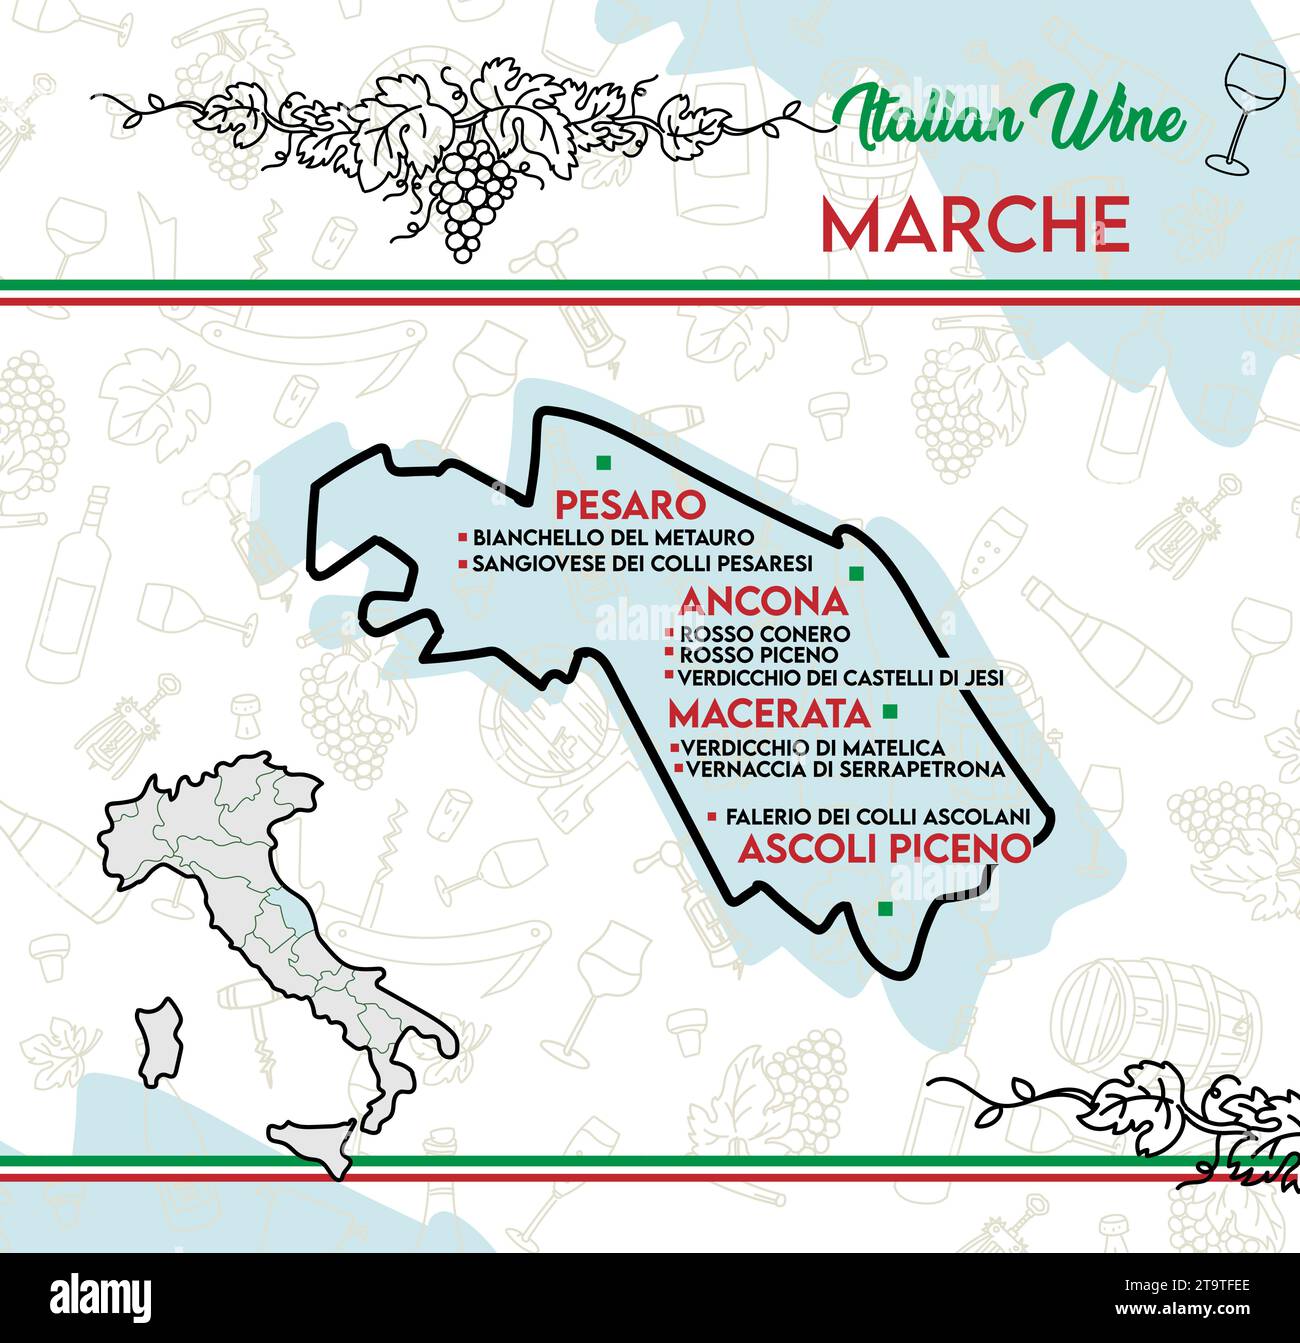 Carta dei vini tipici marchigiani, Italia. illustrazione vettoriale Illustrazione Vettoriale